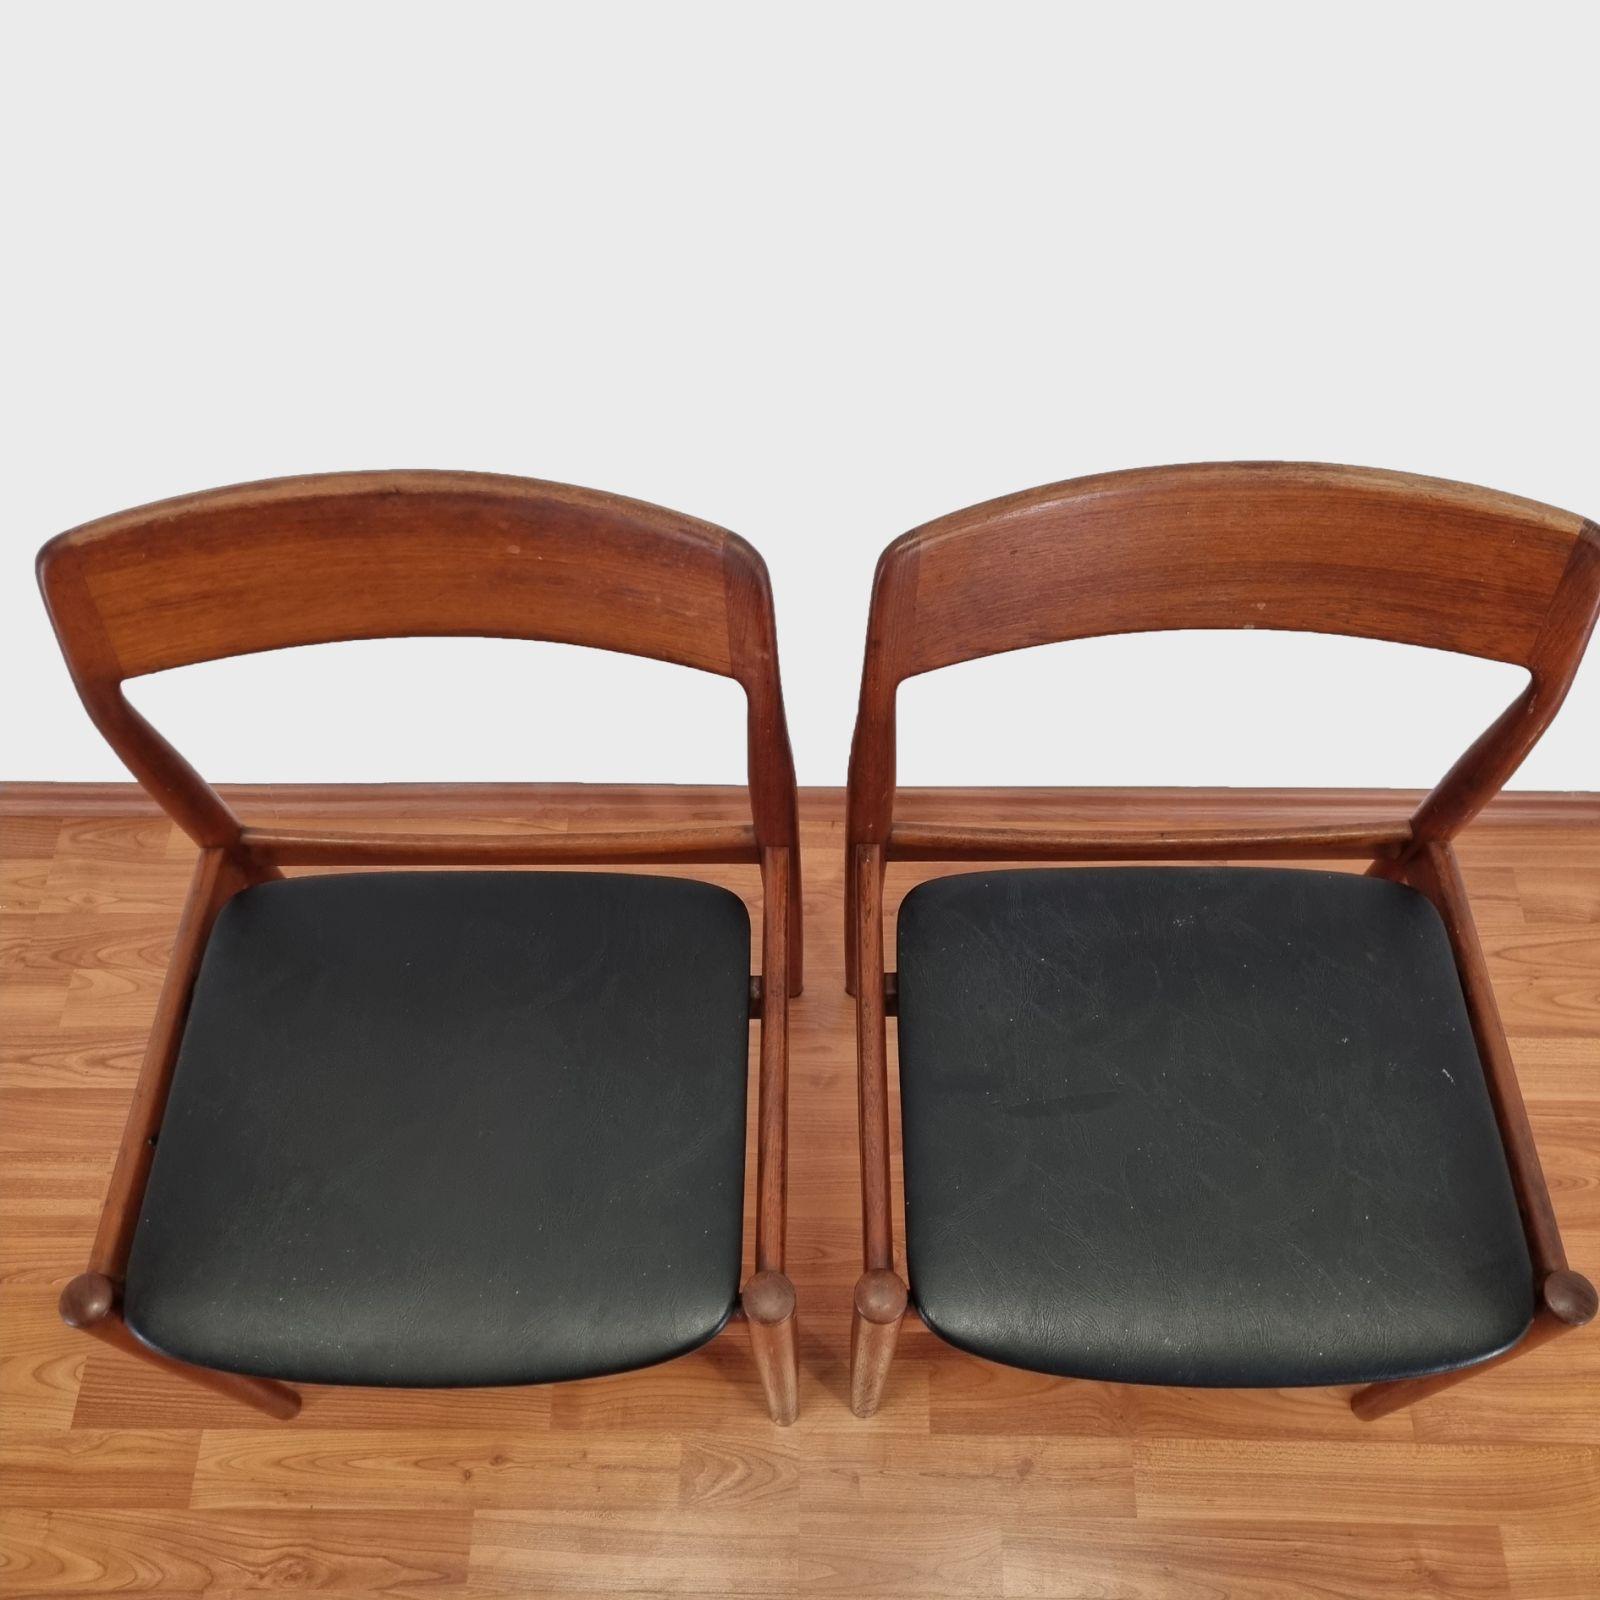 Mid-20th Century Scandinavian Modern Teak Dining Chairs, Design By Niels Otto Möller, Denmark 60s For Sale